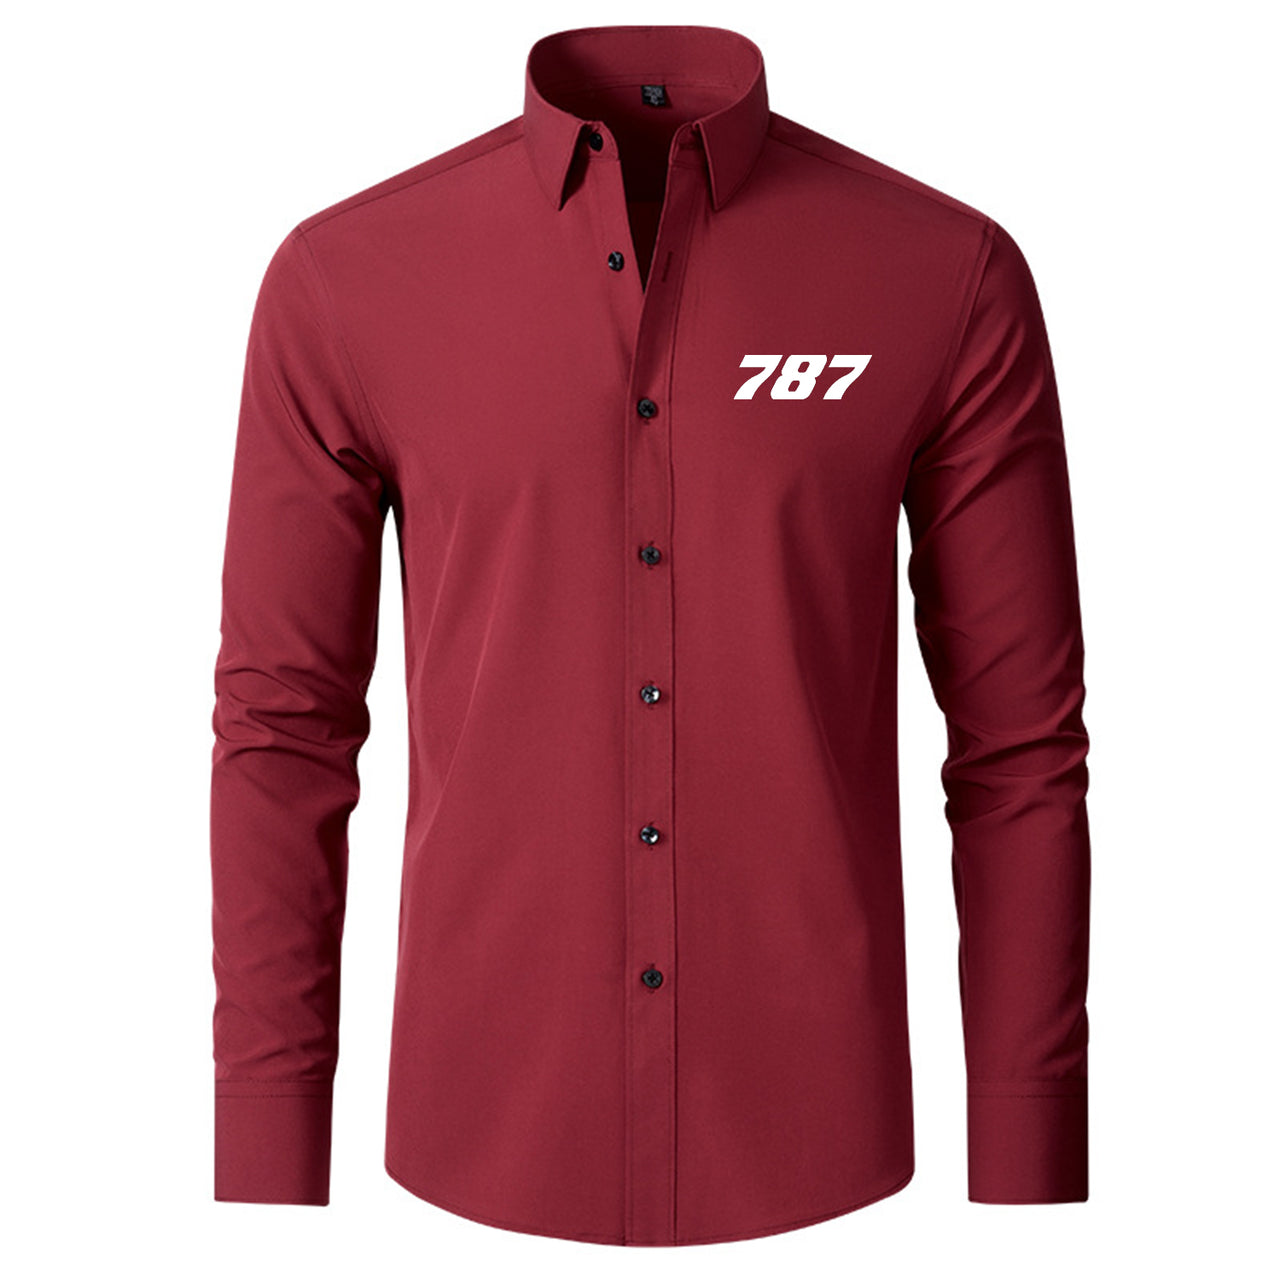 787 Flat Text Designed Long Sleeve Shirts